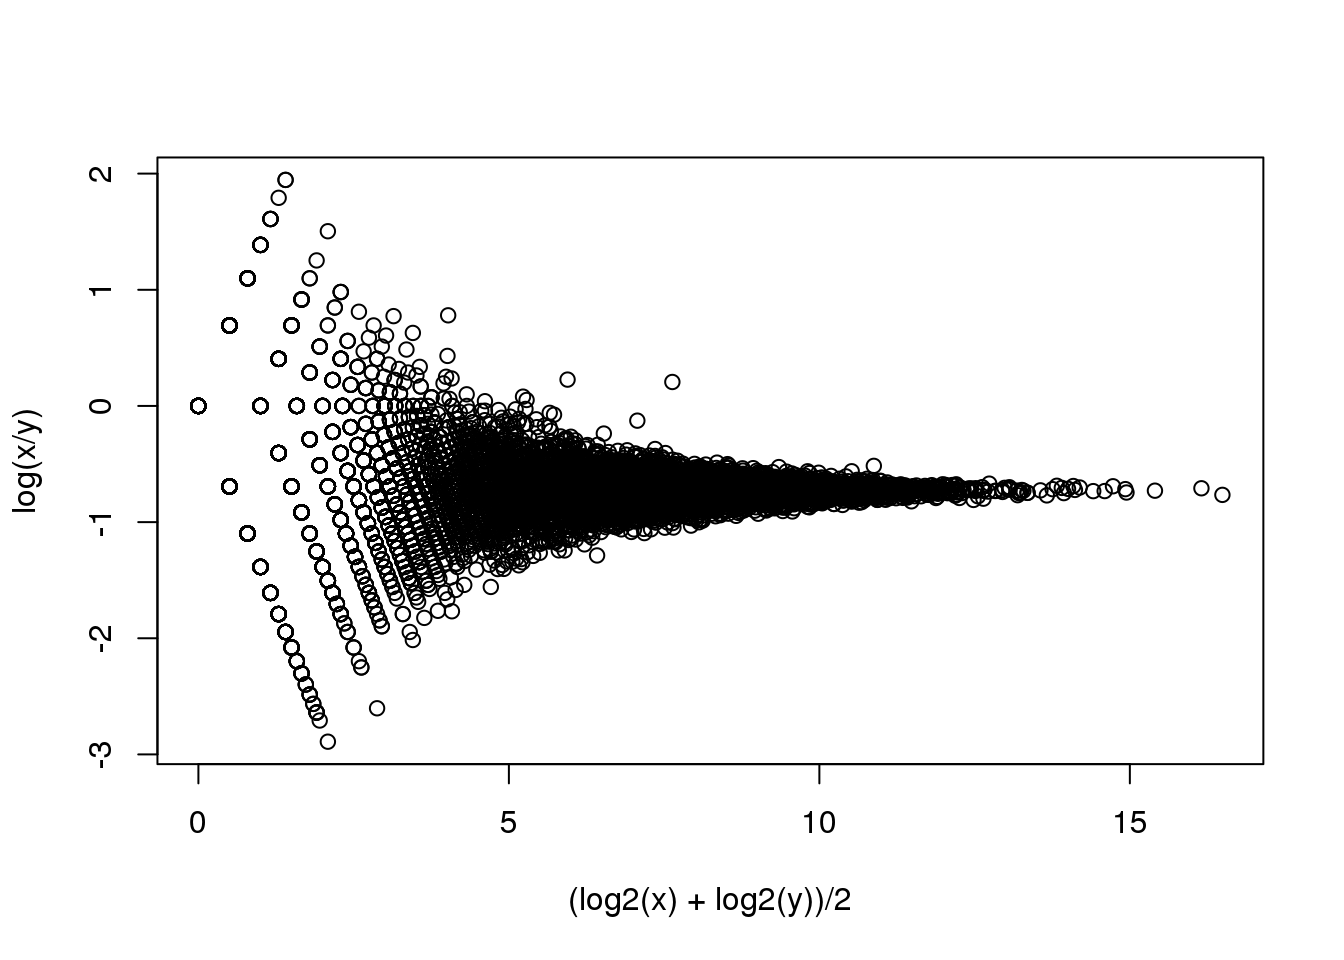 MA plot of replicated RNA-seq data.